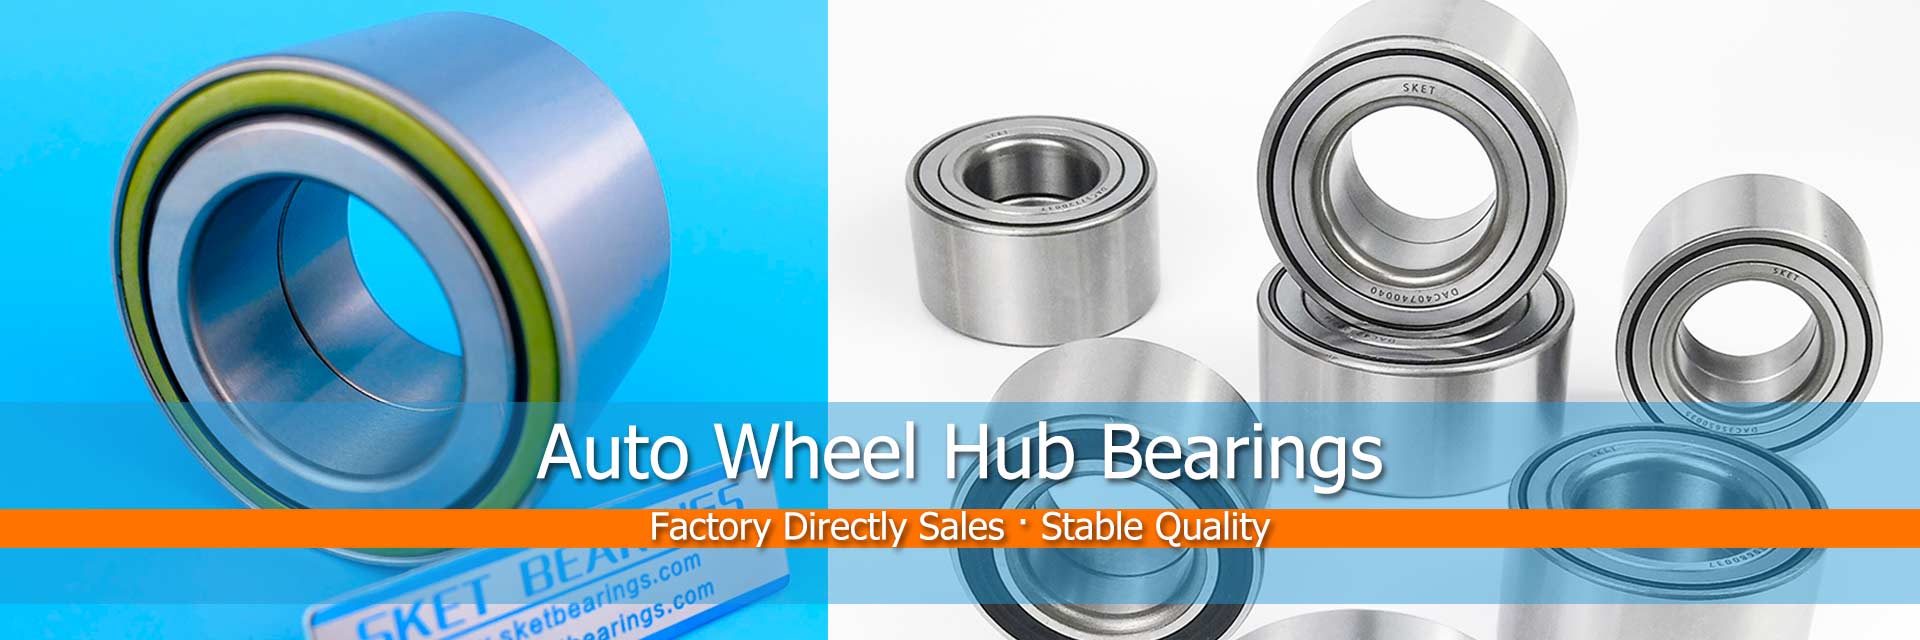 Auto Wheel Hub Bearings